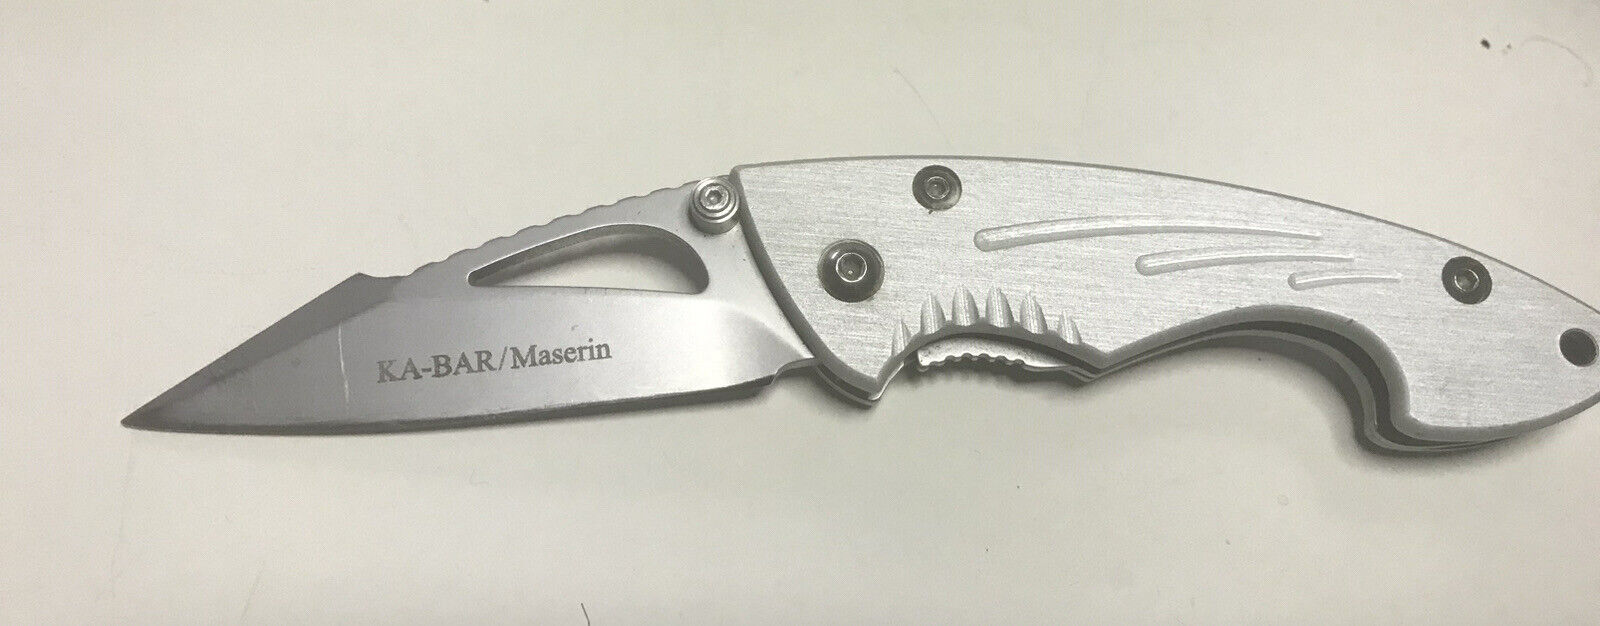 KA-BAR / Maserin Folding Knife, Model 240-T, Made in Italy